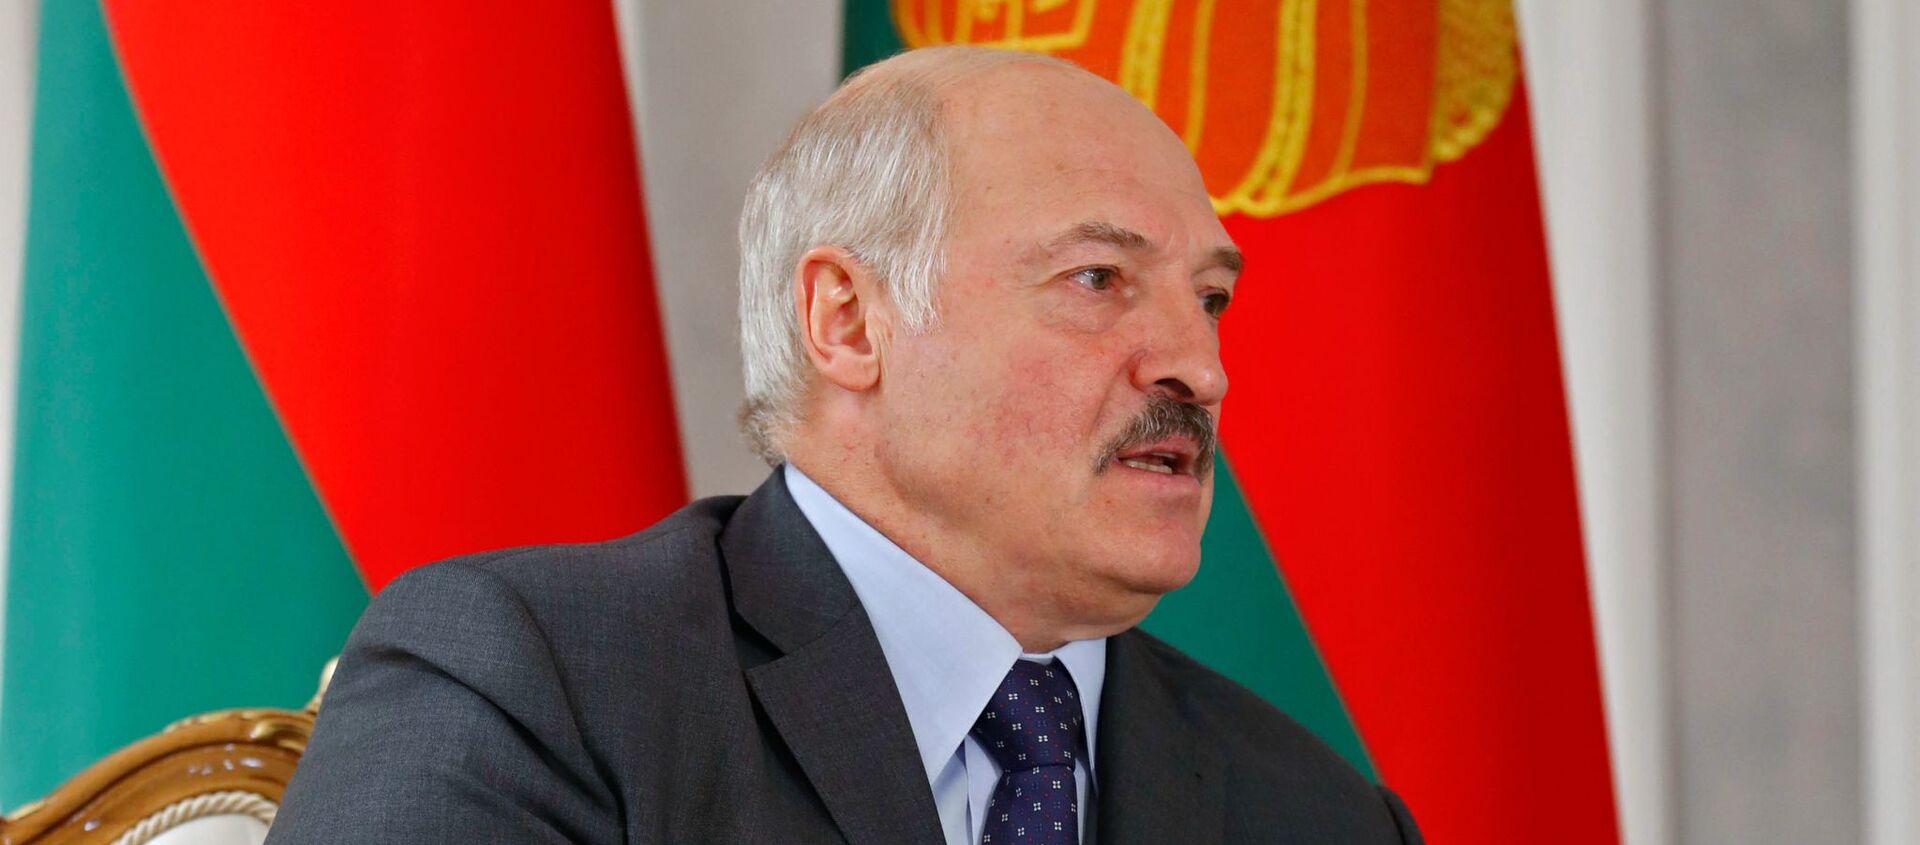 Президент Белоруссии Александр Лукашенко. Архивное фото - Sputnik Кыргызстан, 1920, 11.01.2021